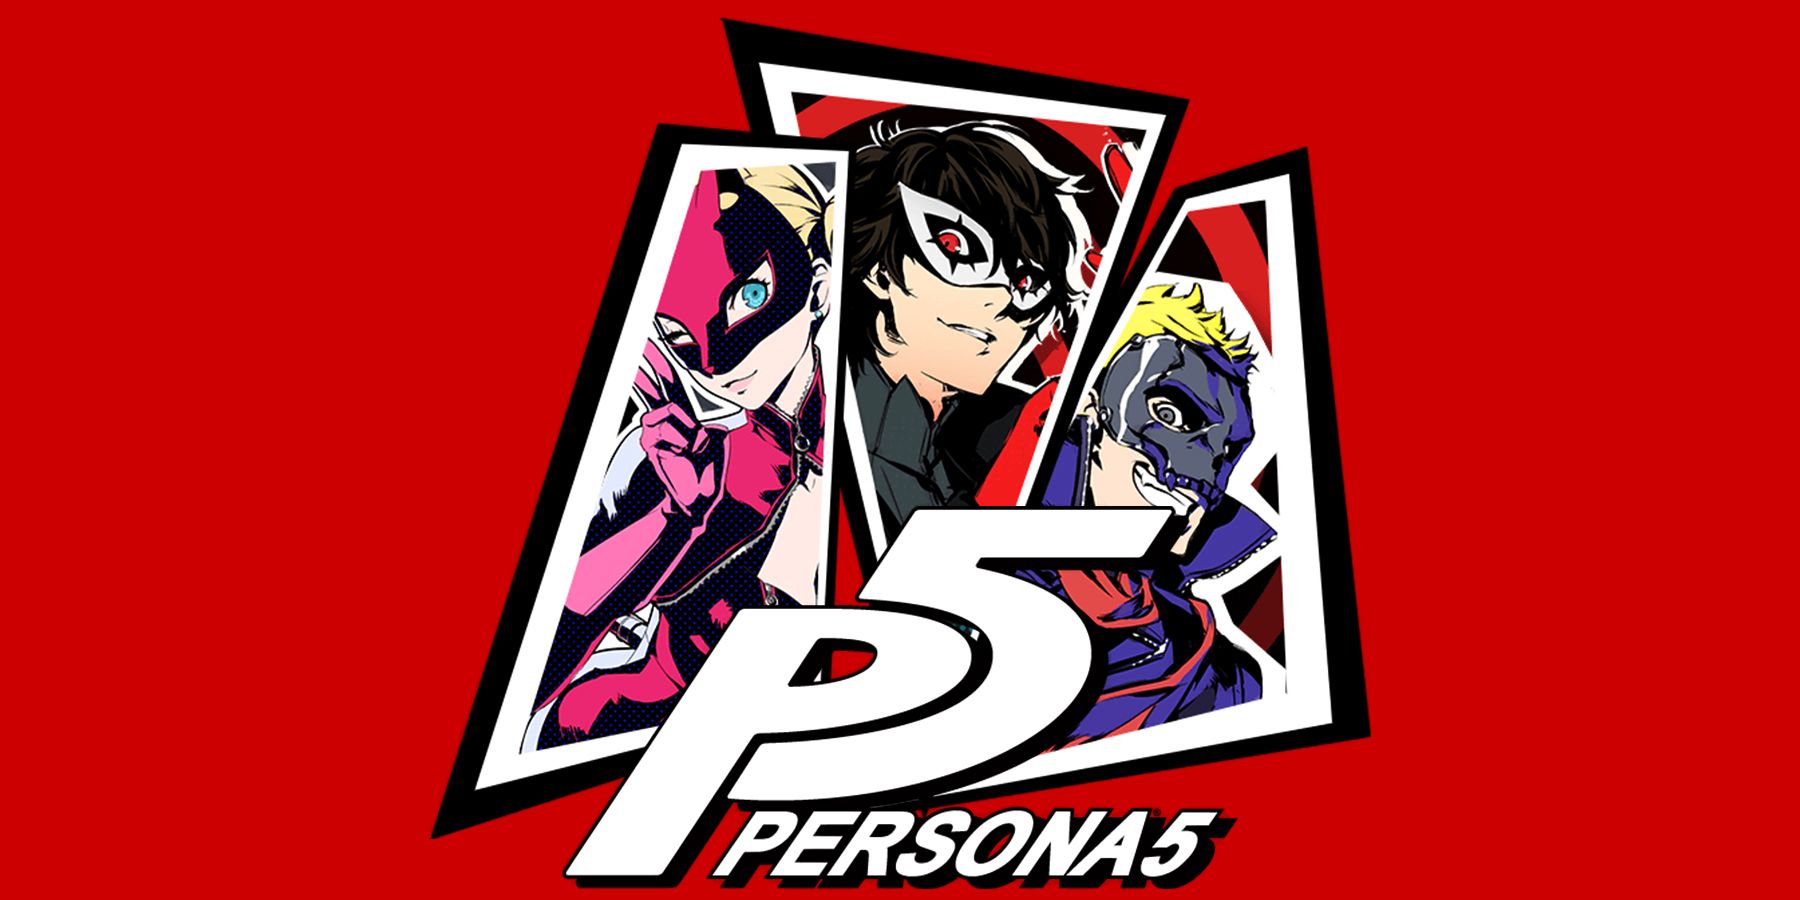 Persona 5 logo with Phantom Thieves portraits